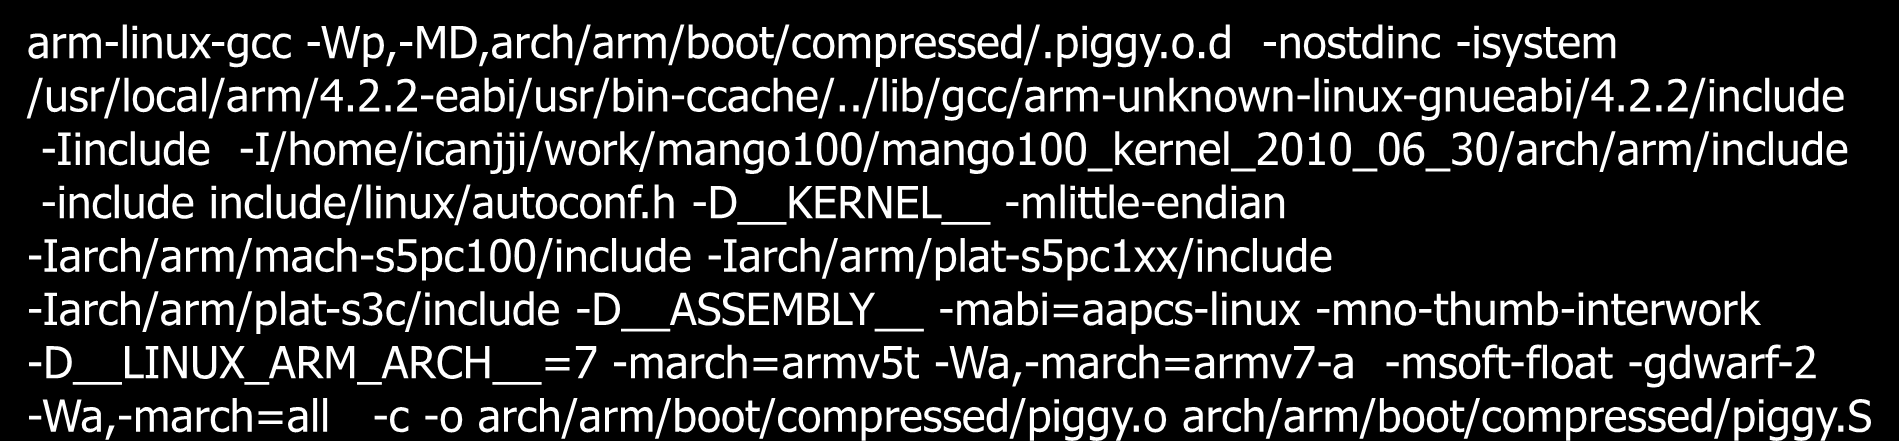 Building zimage (2/3) 3. arch/arm/boot/compressed/piggy.o arm-linux-gcc -Wp,-MD,arch/arm/boot/compressed/.piggy.o.d -nostdinc -isystem /usr/local/arm/4.2.2-eabi/usr/bin-ccache/.